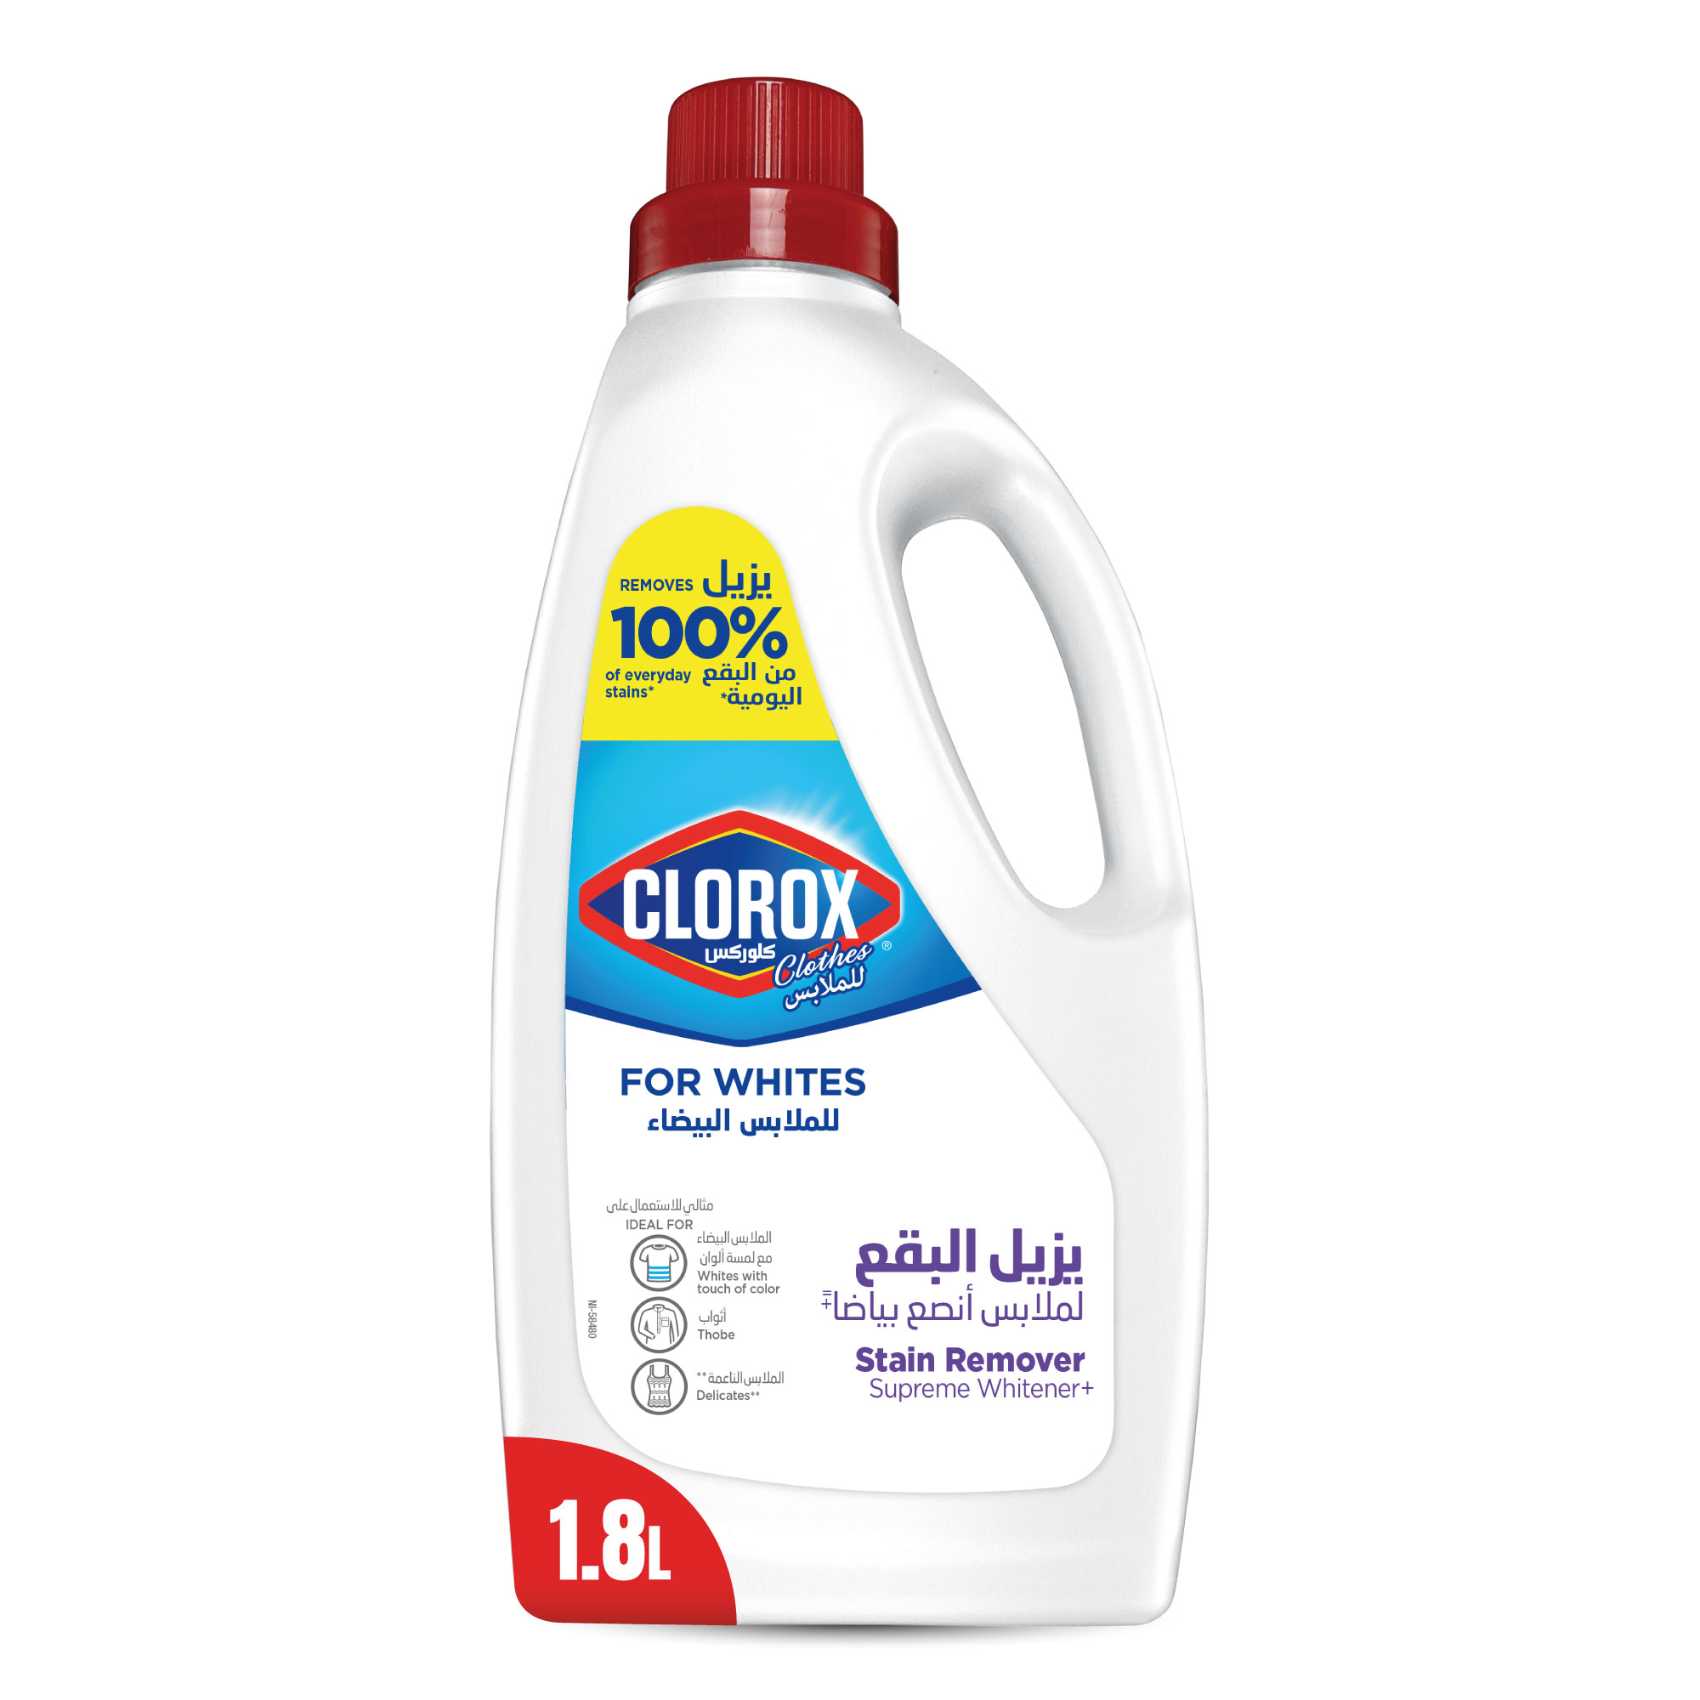 Clorox Clothes Liquid Stain Remover and Supreme Whitener For White Clothes 1.8L